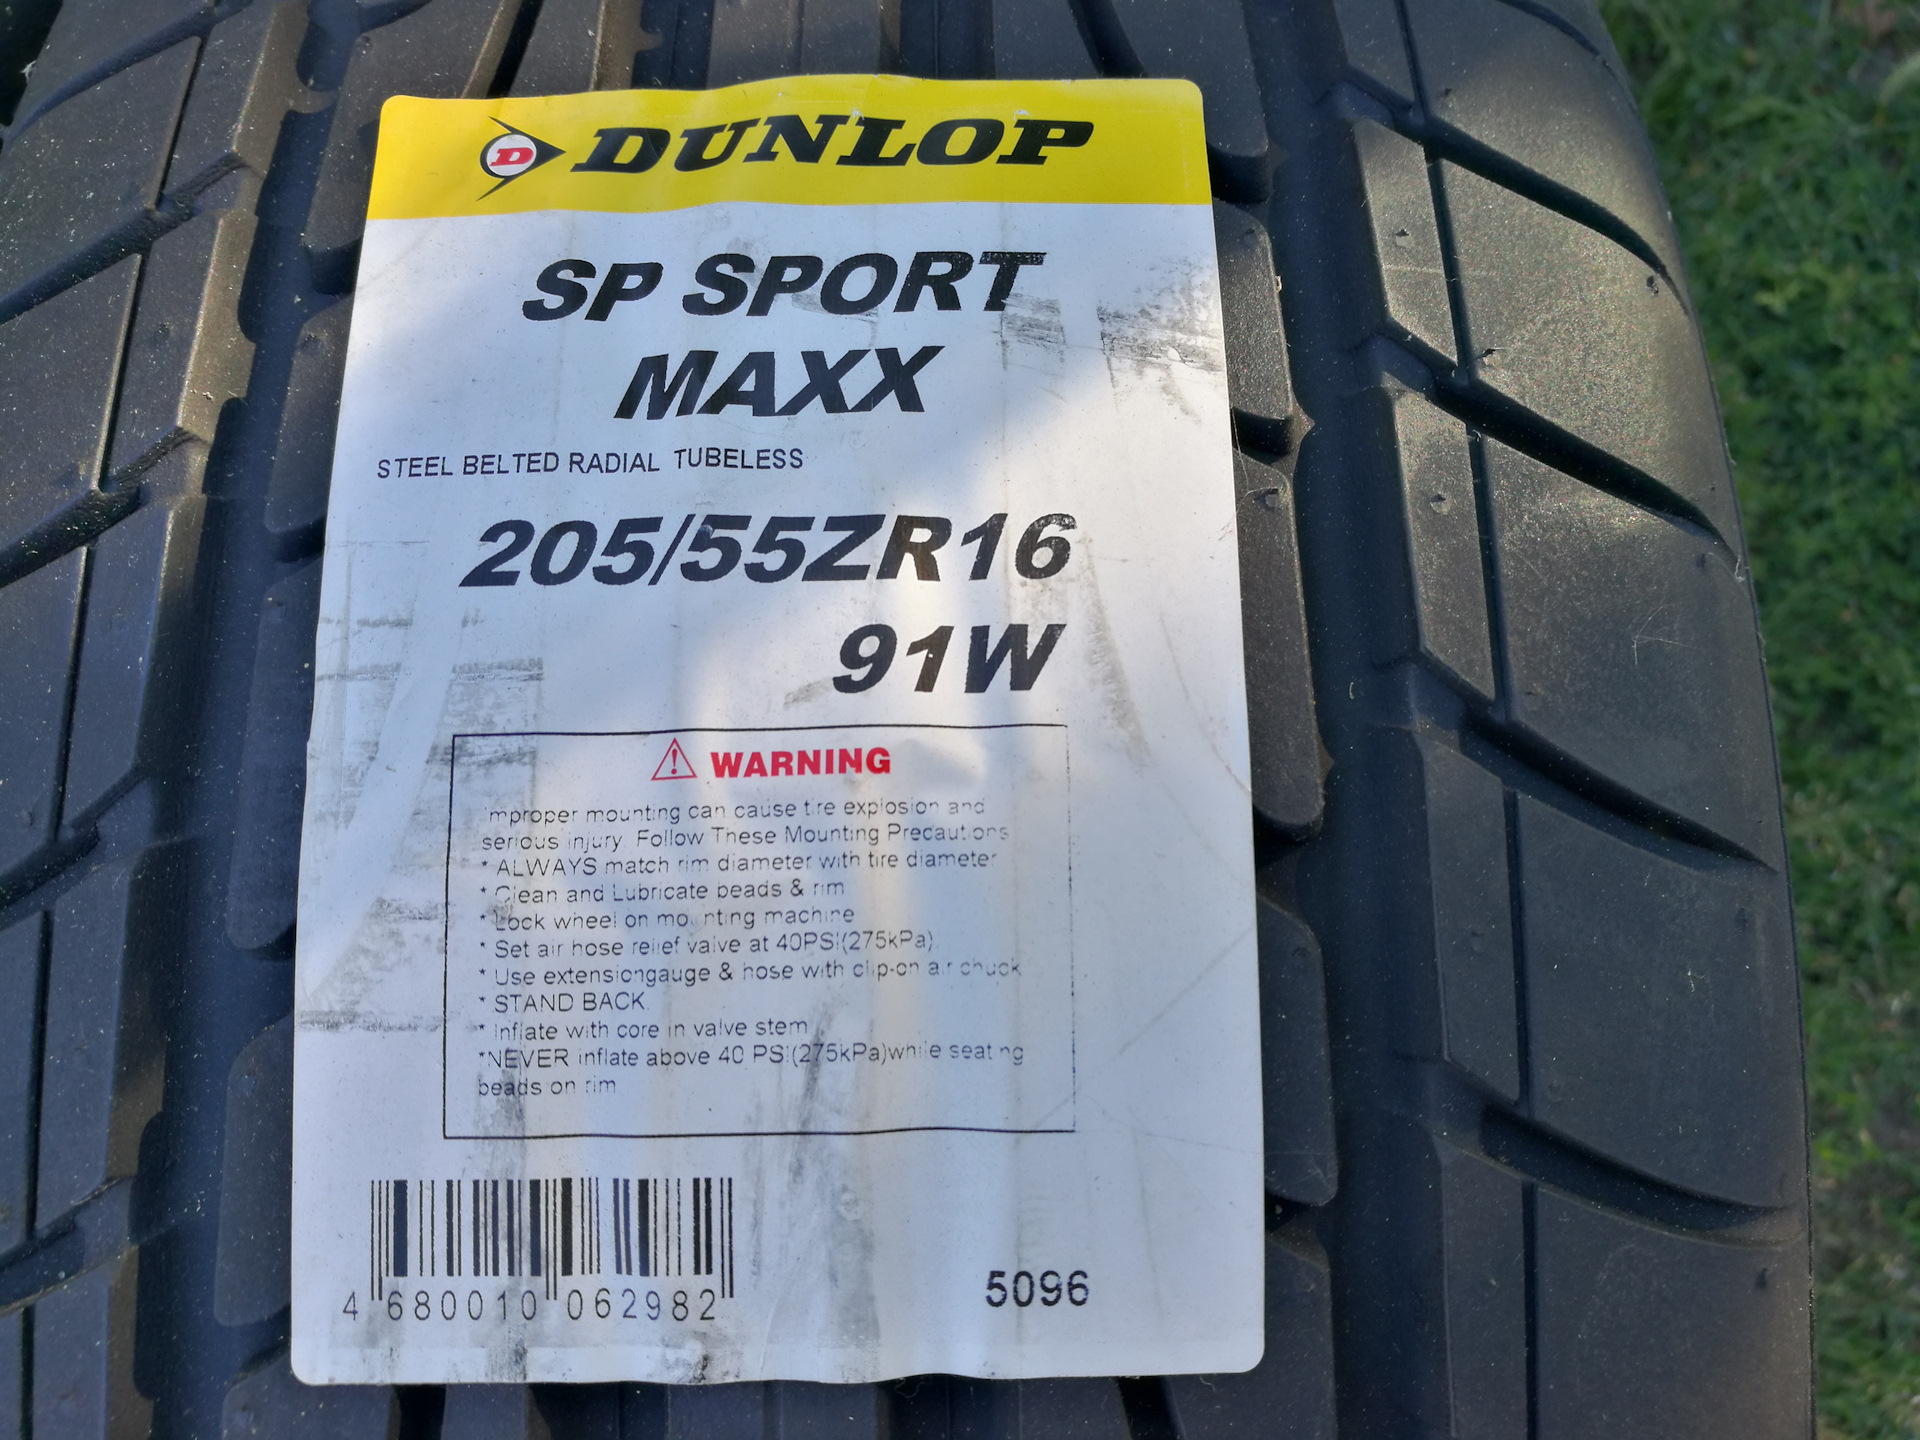 Dunlop sp sport 205 55 r16. Dunlop SP Sport Maxx 205/55 r16. Dunlop SP Sport Maxx евроэтикетка. Автошина Dunlop SP Sport Maxx TT 205/55/16 91w. Dunlop SP Sport Maxx 205/55 r16 91w летняя.